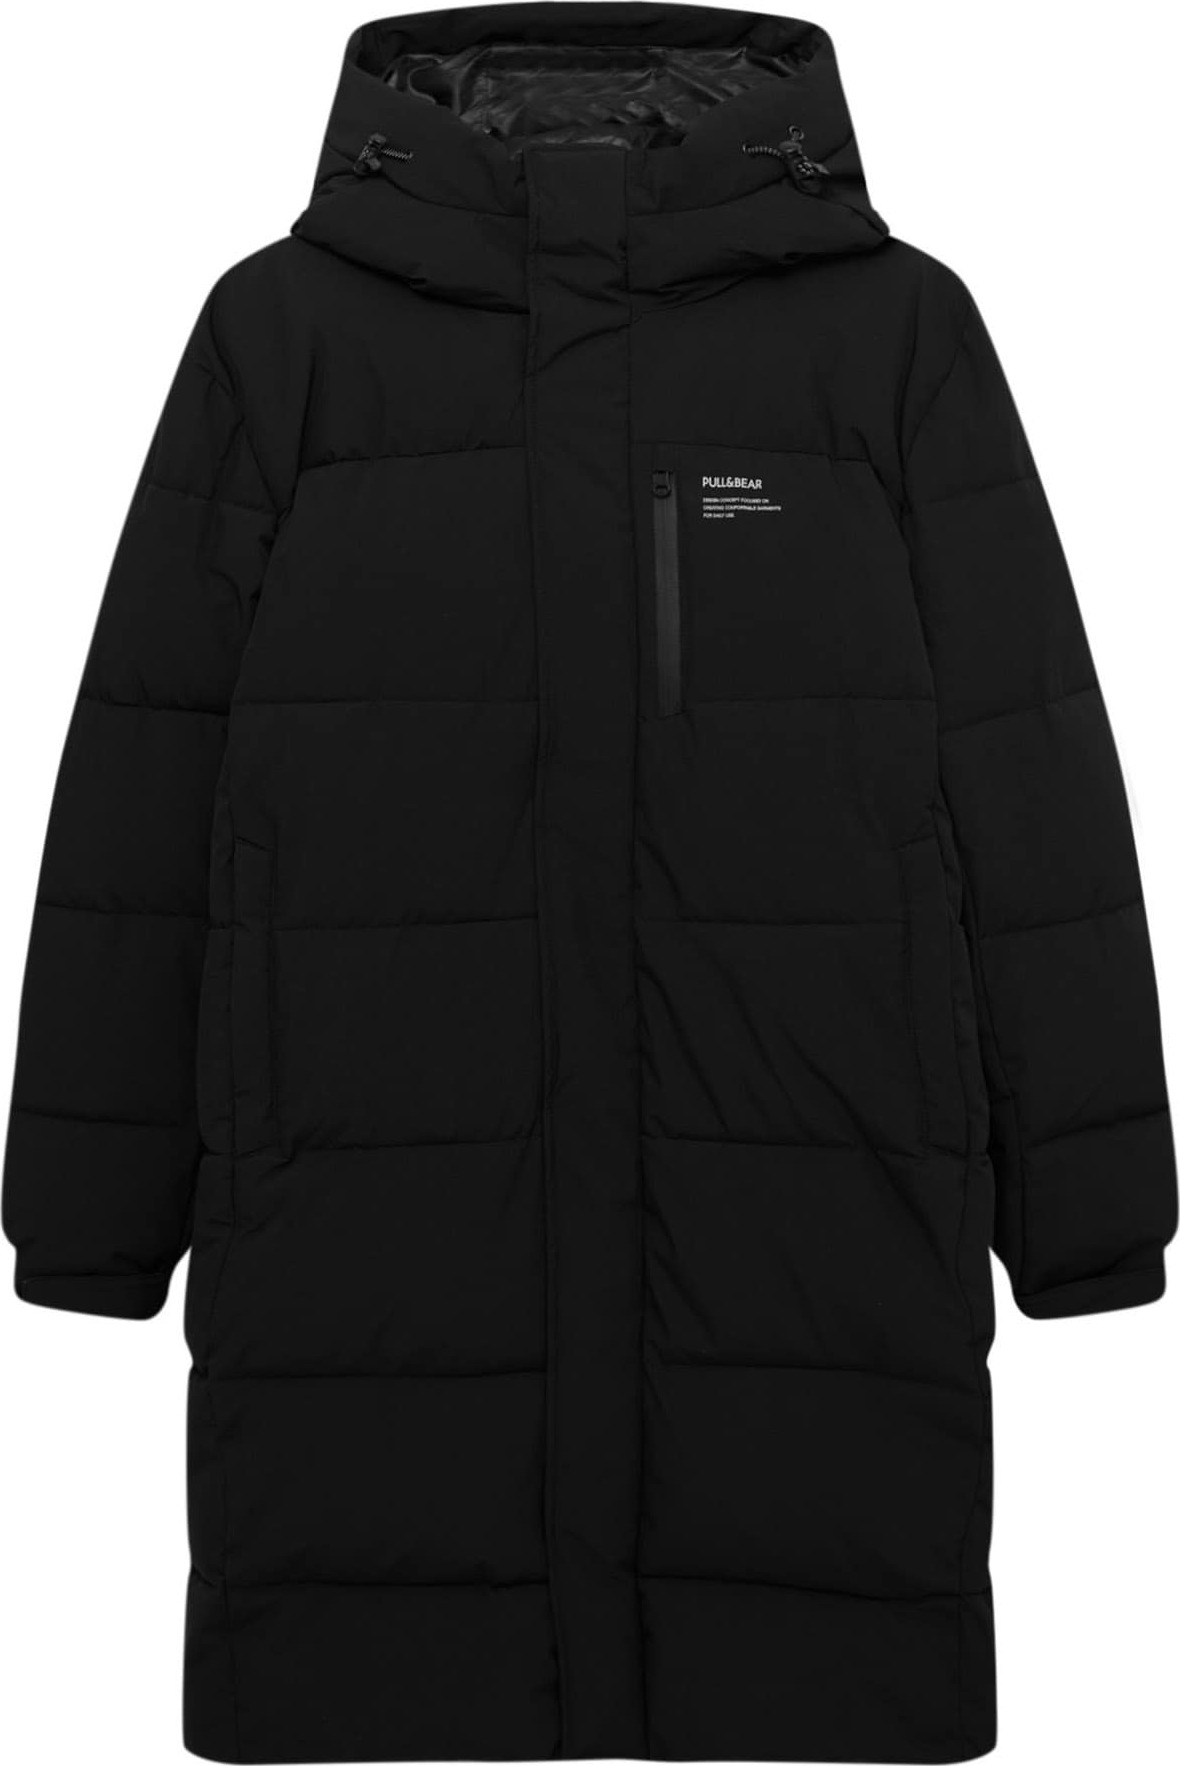 Pull&Bear Zimní kabát černá / bílá